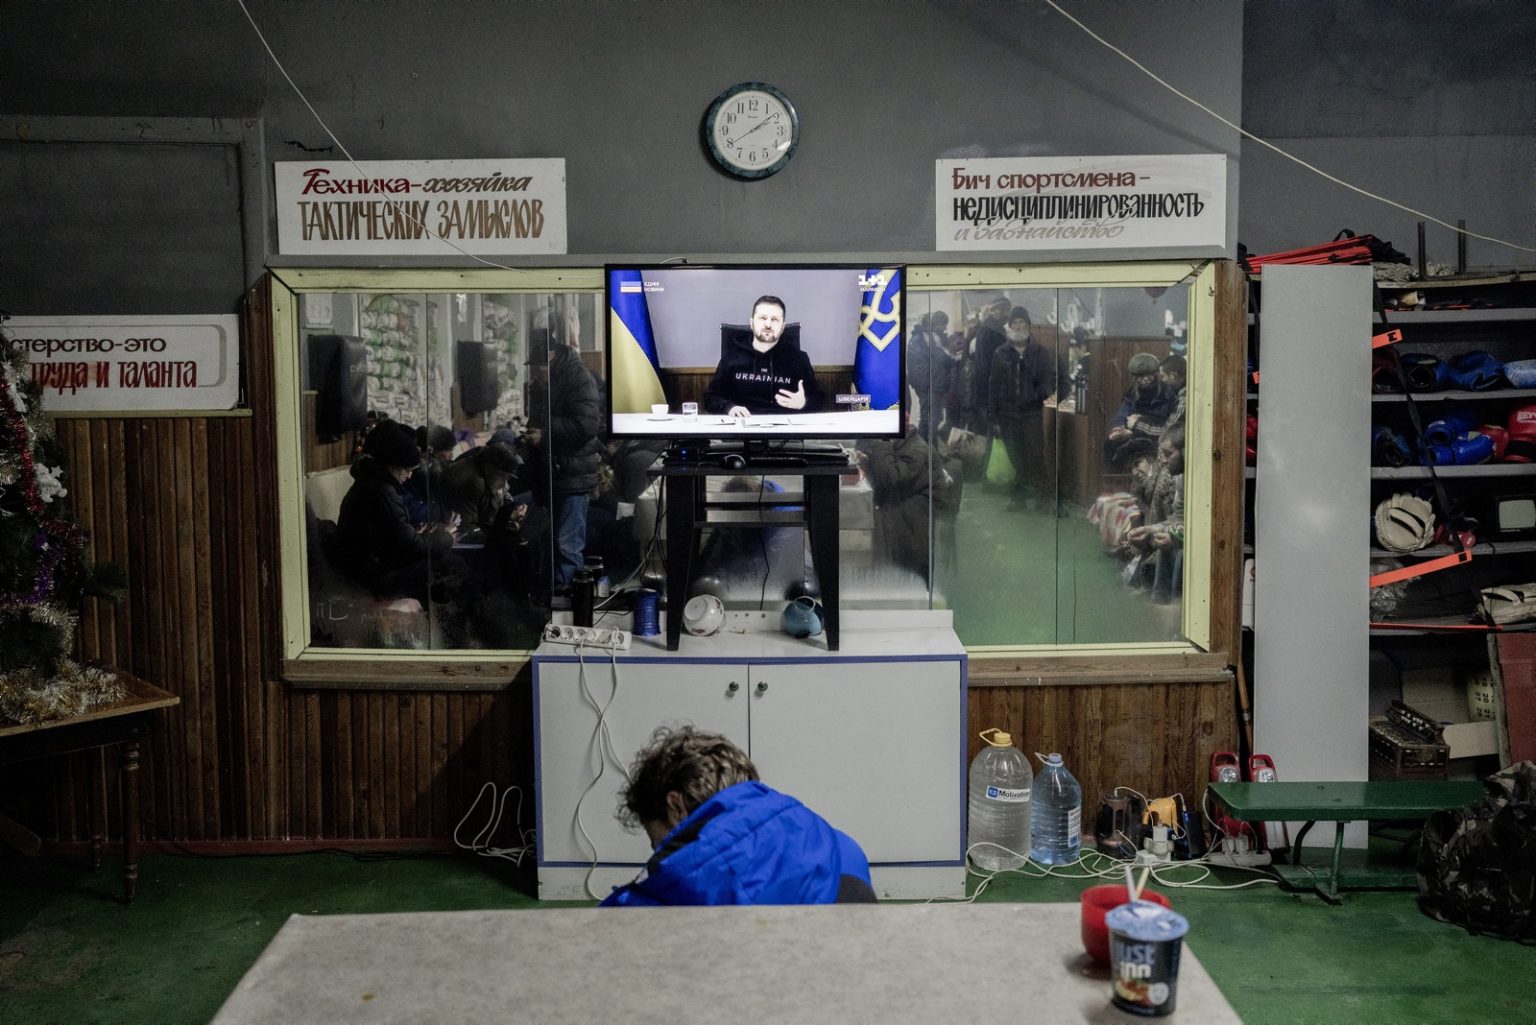 UKRAINE, Bakhmut. January 19, 2023 - People gather inside a gym used as a shelter in Bakhmut. ><
UCRAINA, Bakhmut. 19 gennaio 2023 - Le persone si riuniscono all'interno di una palestra utilizzata come rifugio a Bakhmut.